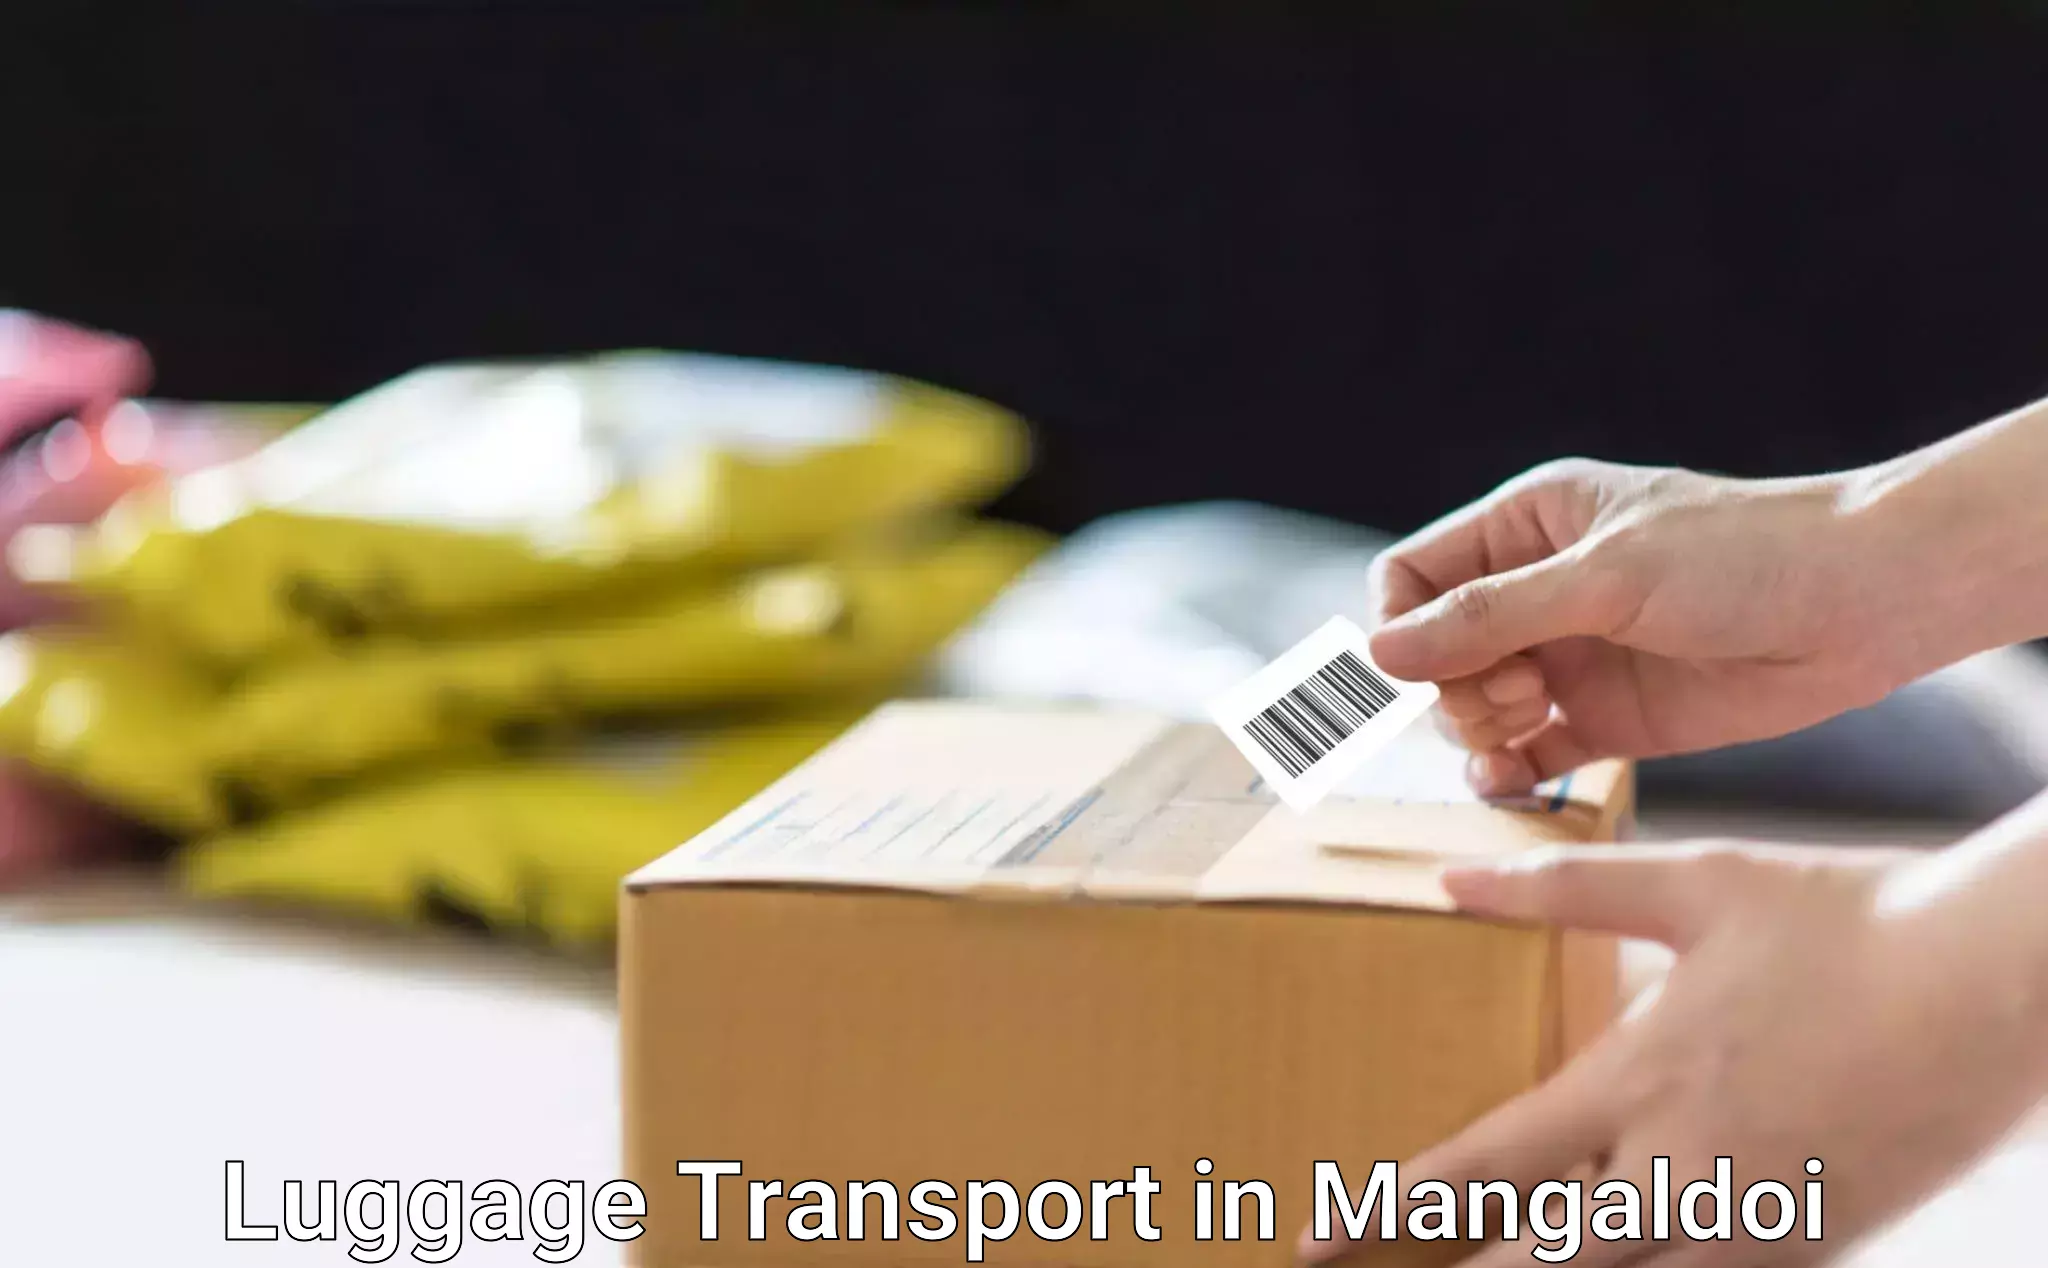 Luggage transport company in Mangaldoi